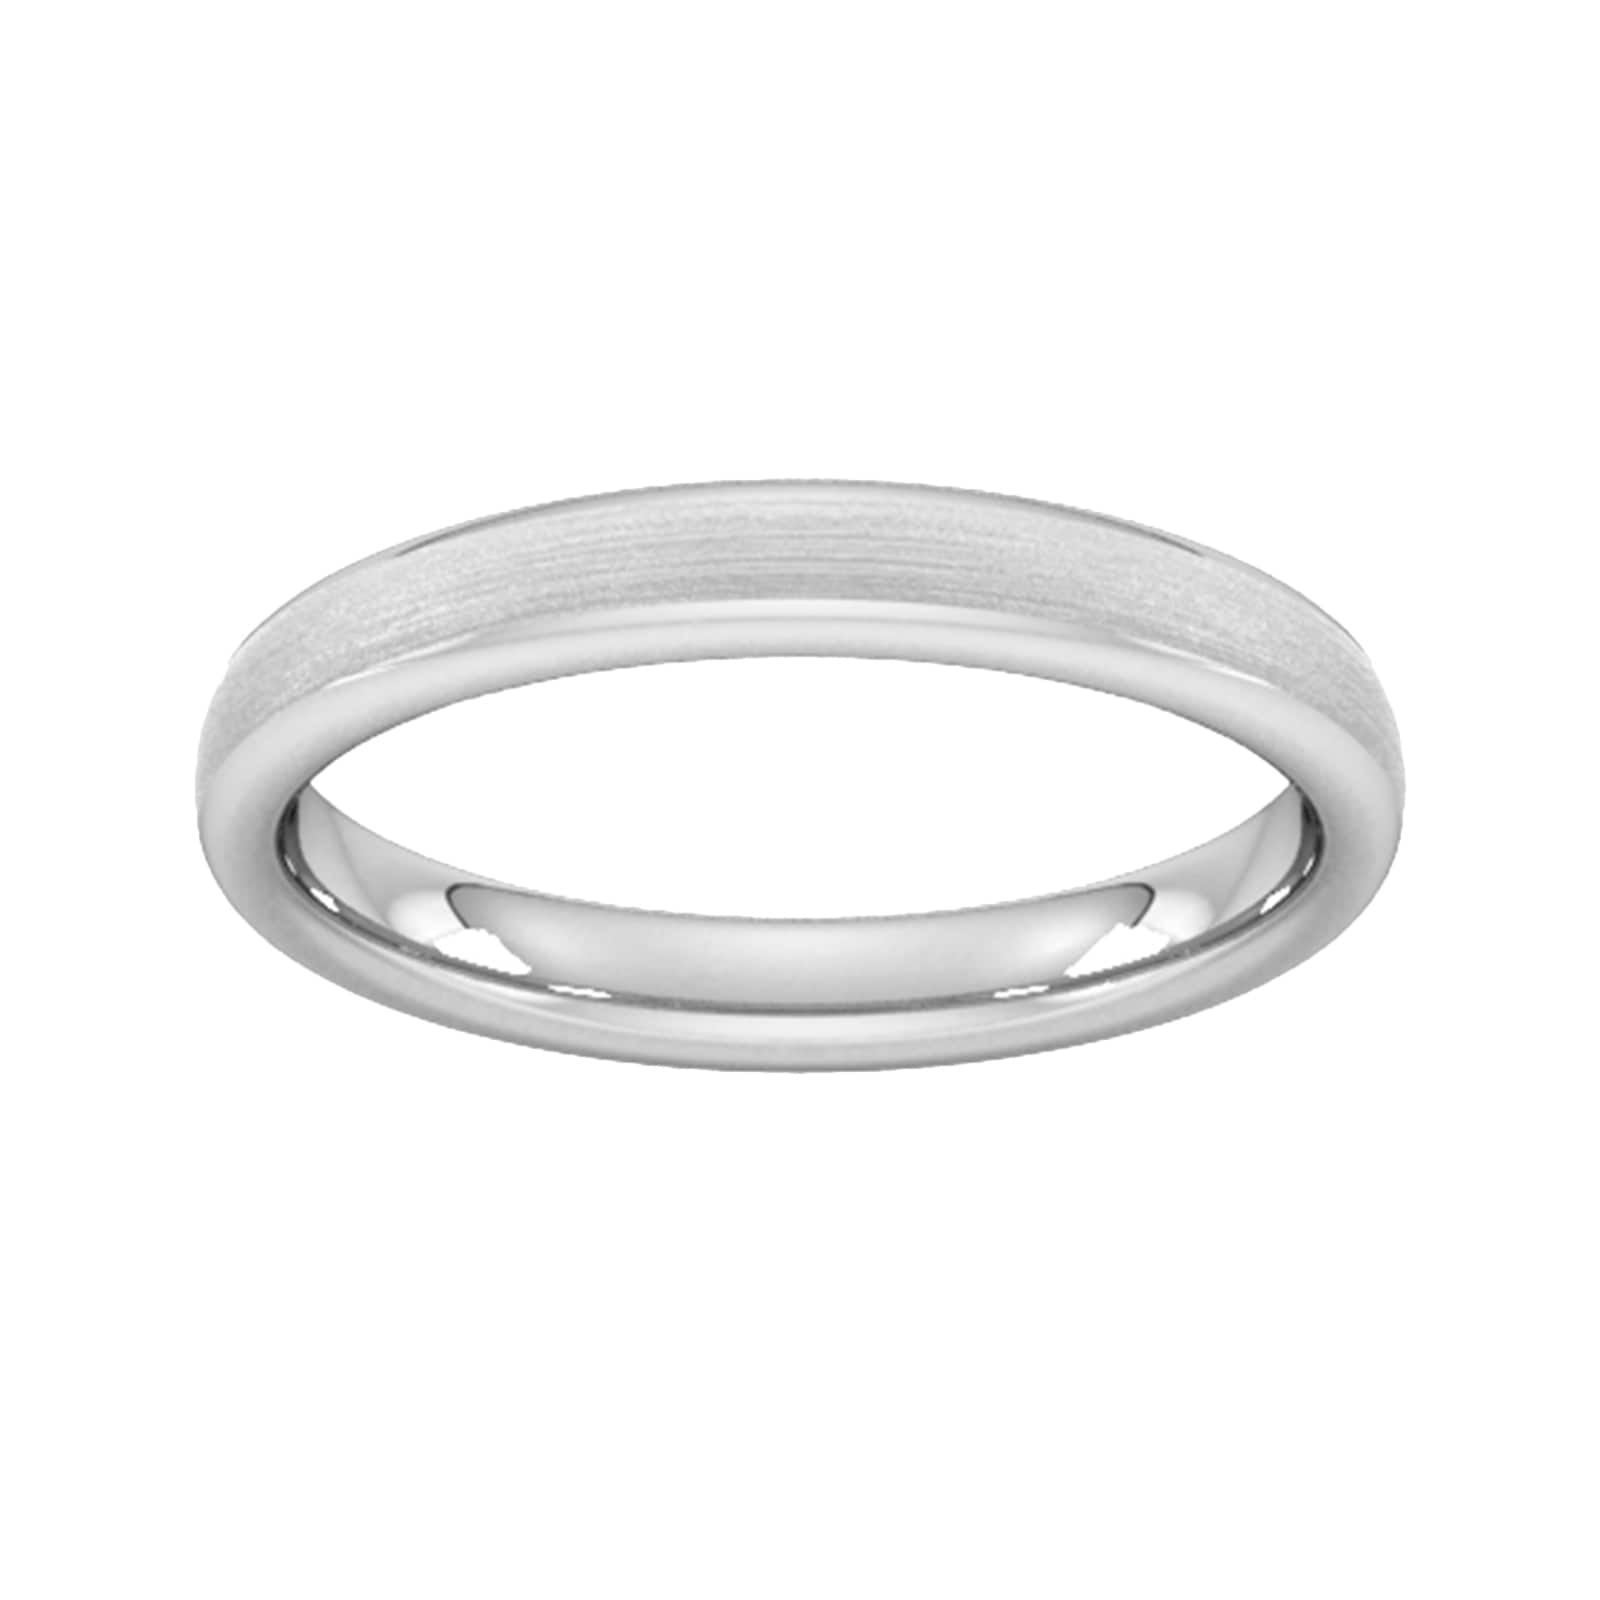 3mm Slight Court Heavy Matt Finished Wedding Ring In 18 Carat White Gold - Ring Size N